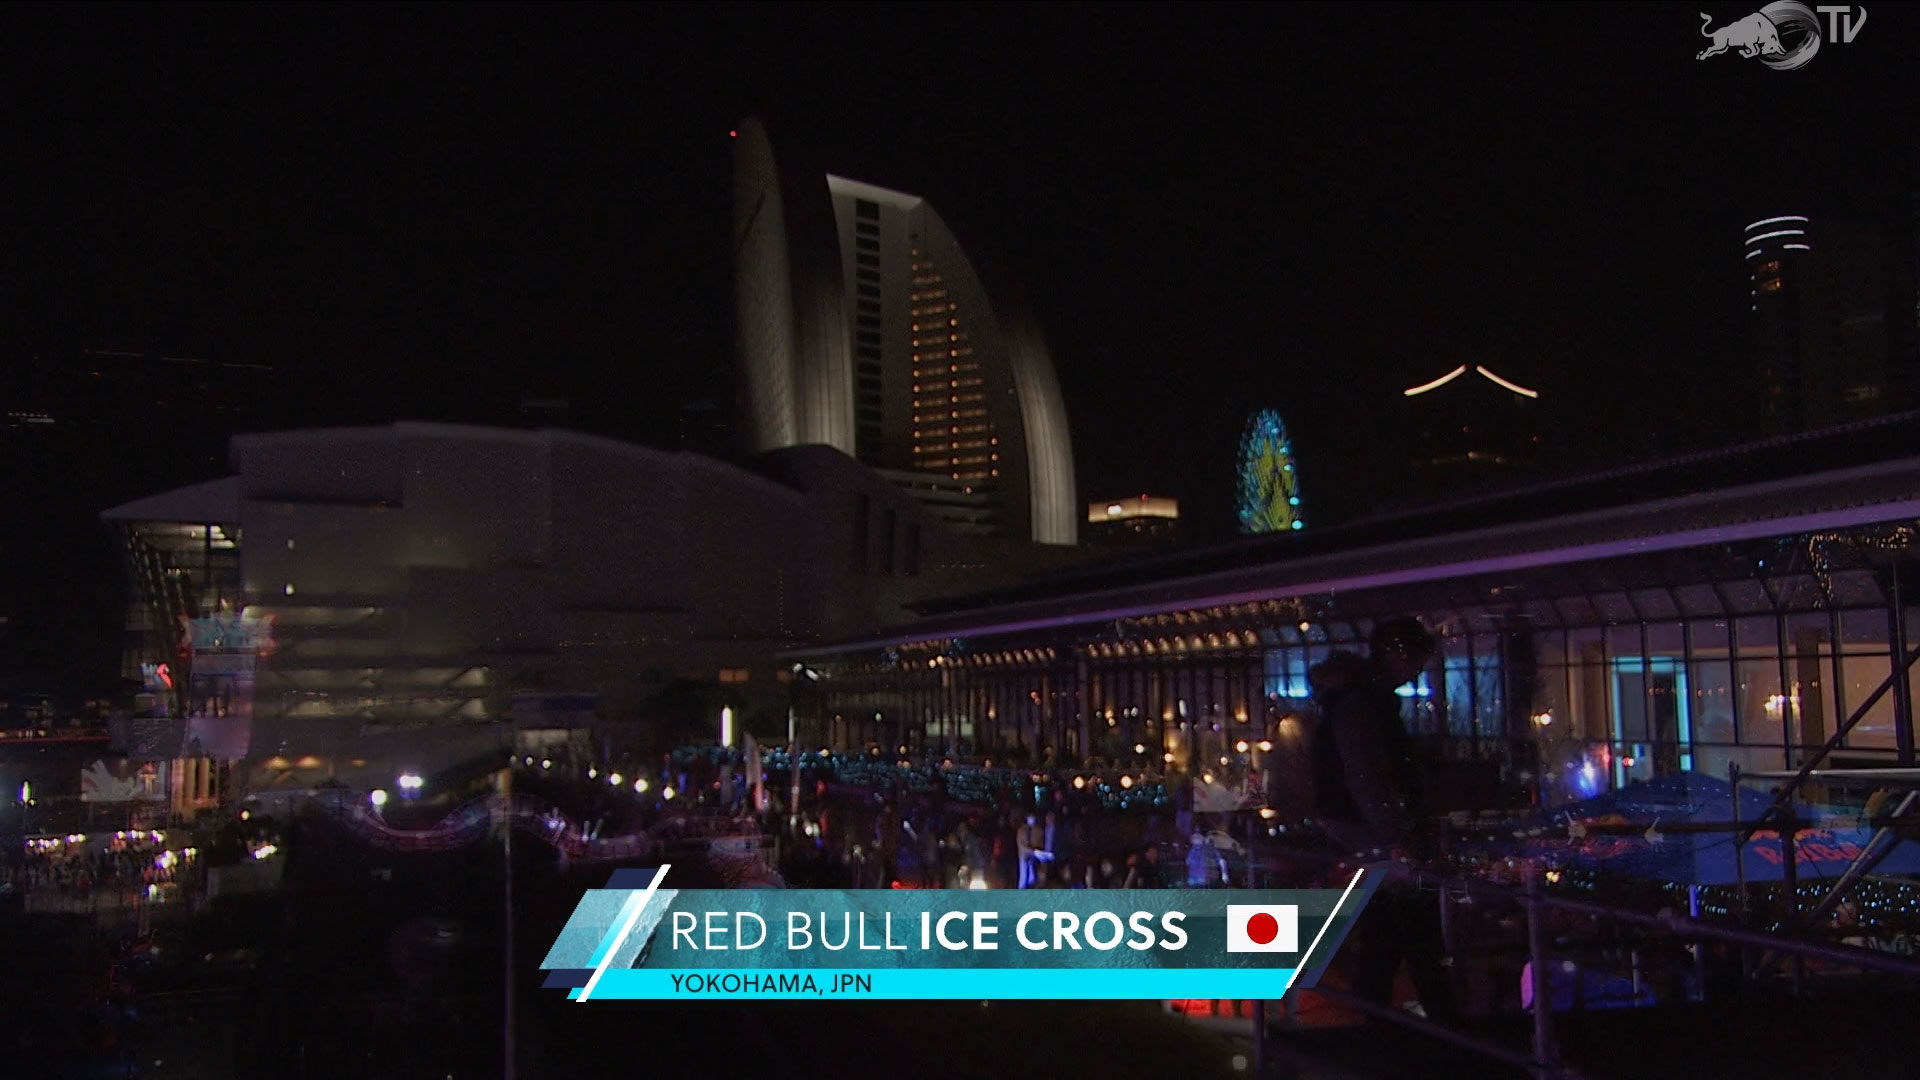 Red Bull Ice Cross Yokohama 2020